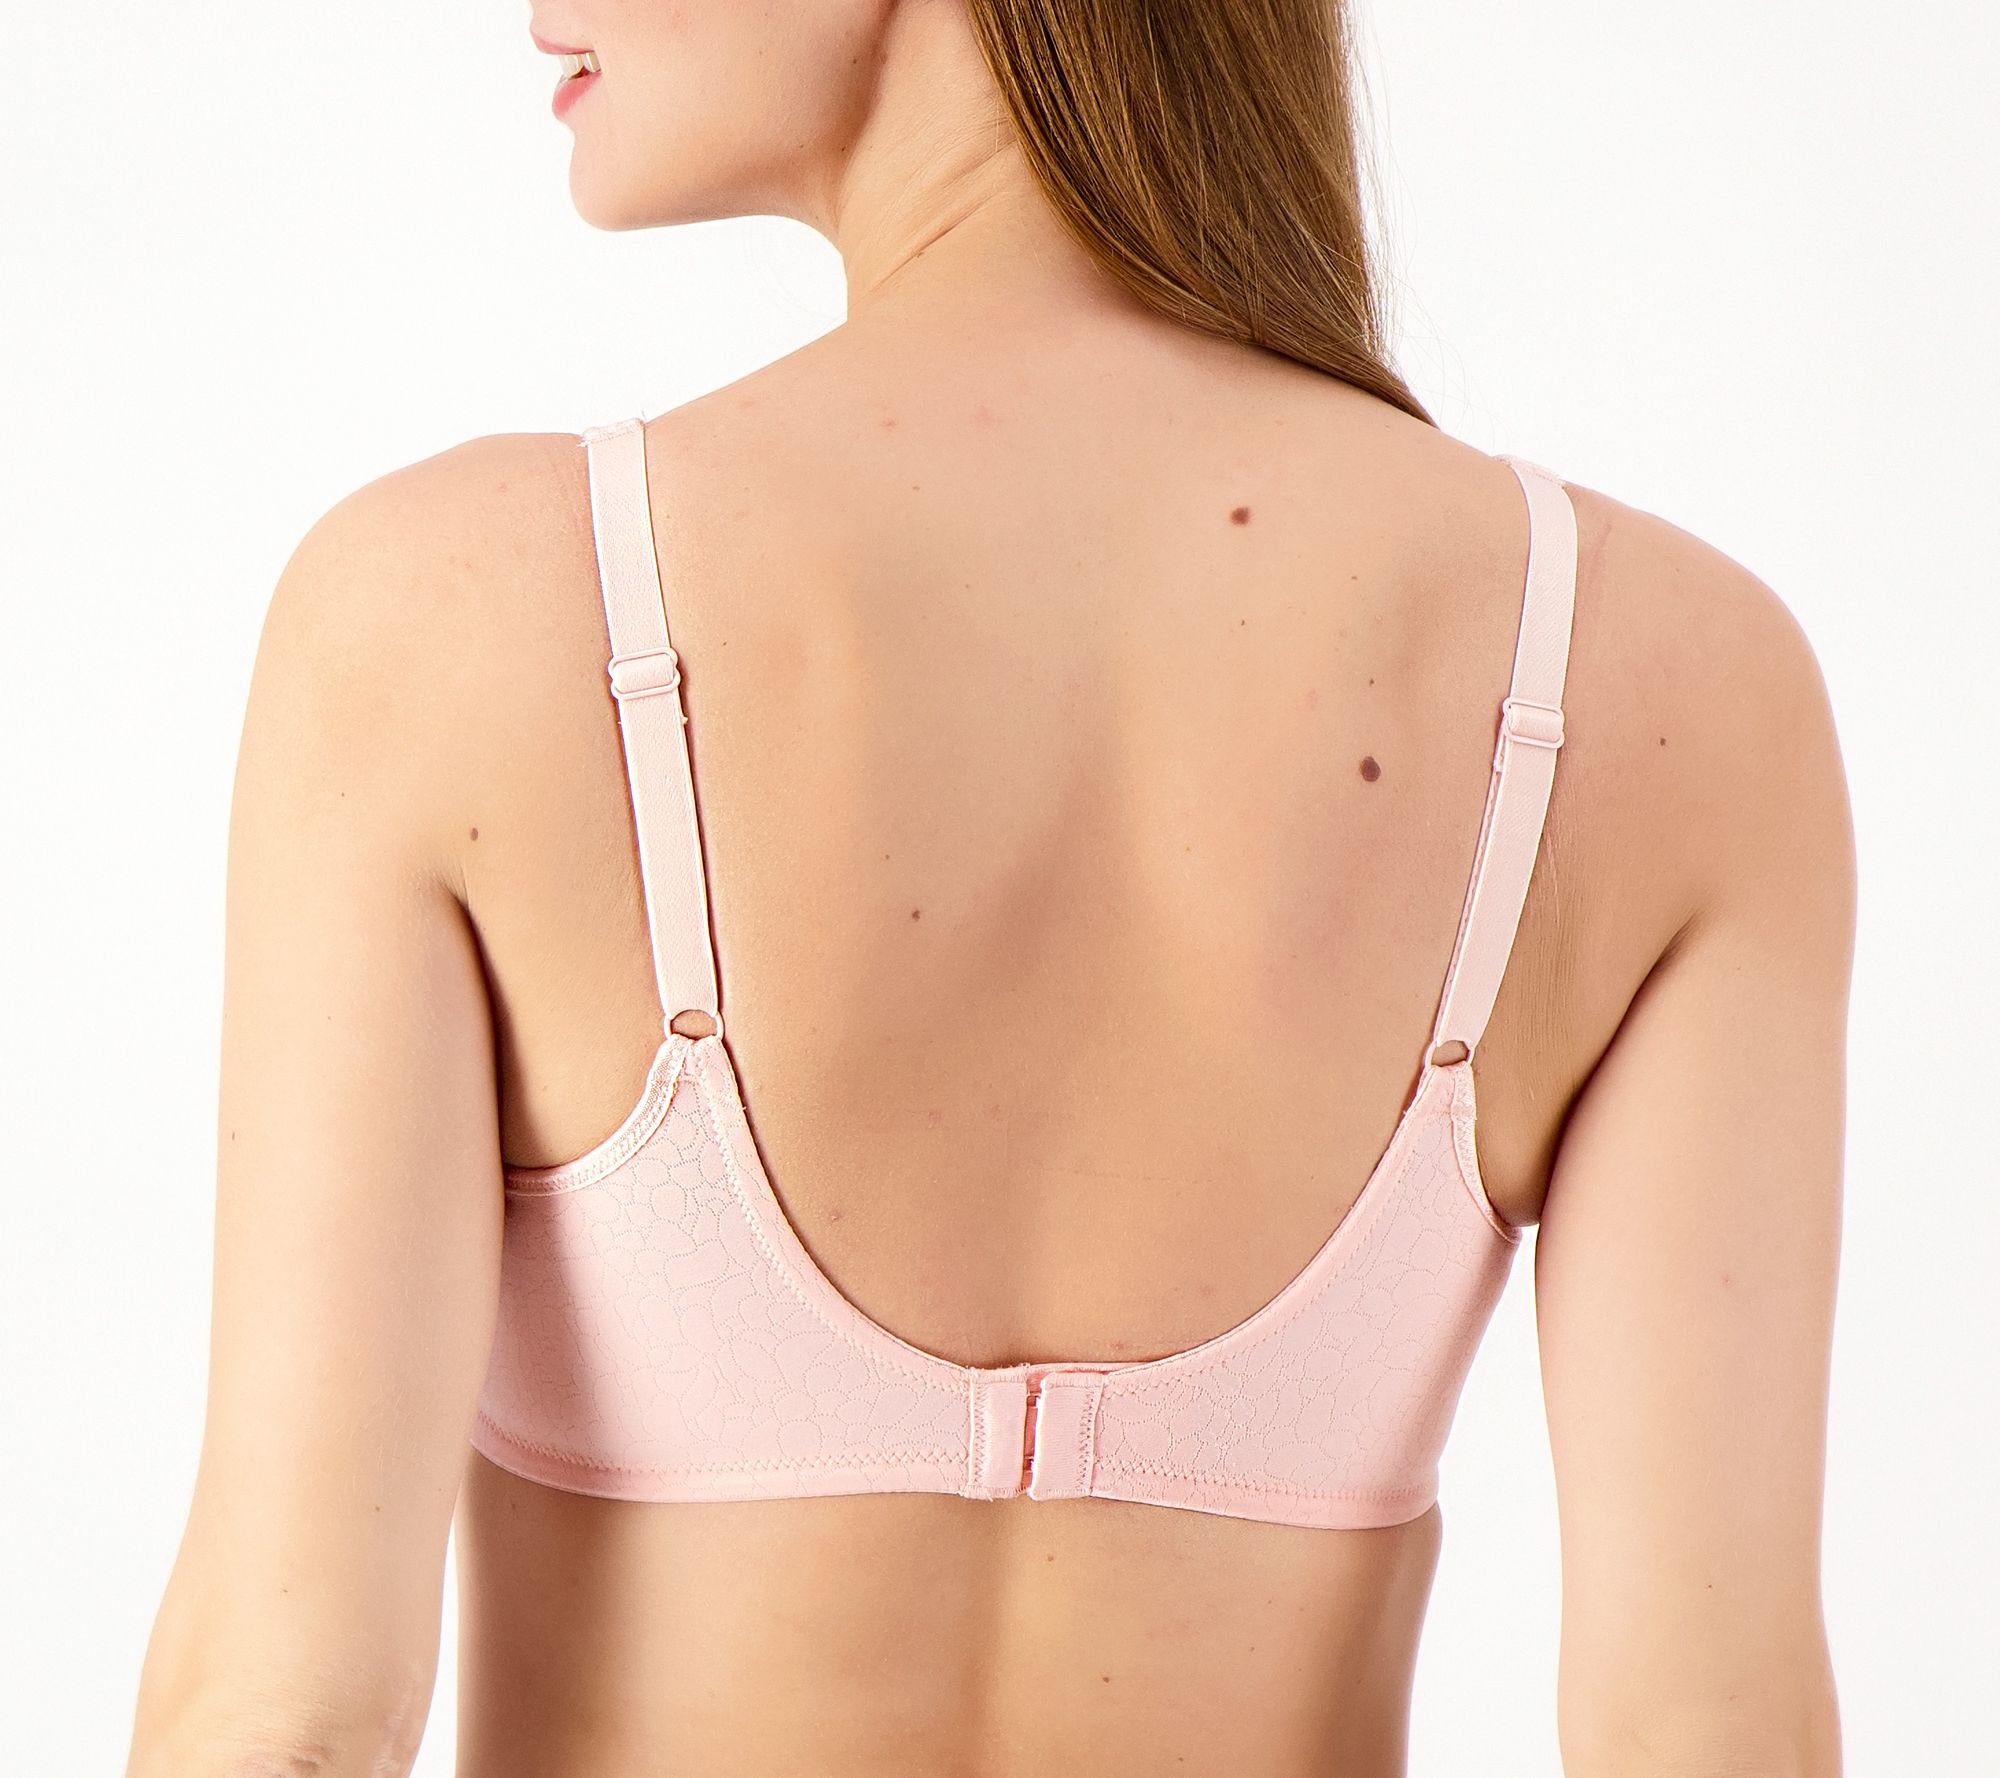 LOTUSLEAF on X: A minimizer bra is a perfect bra to wear under a